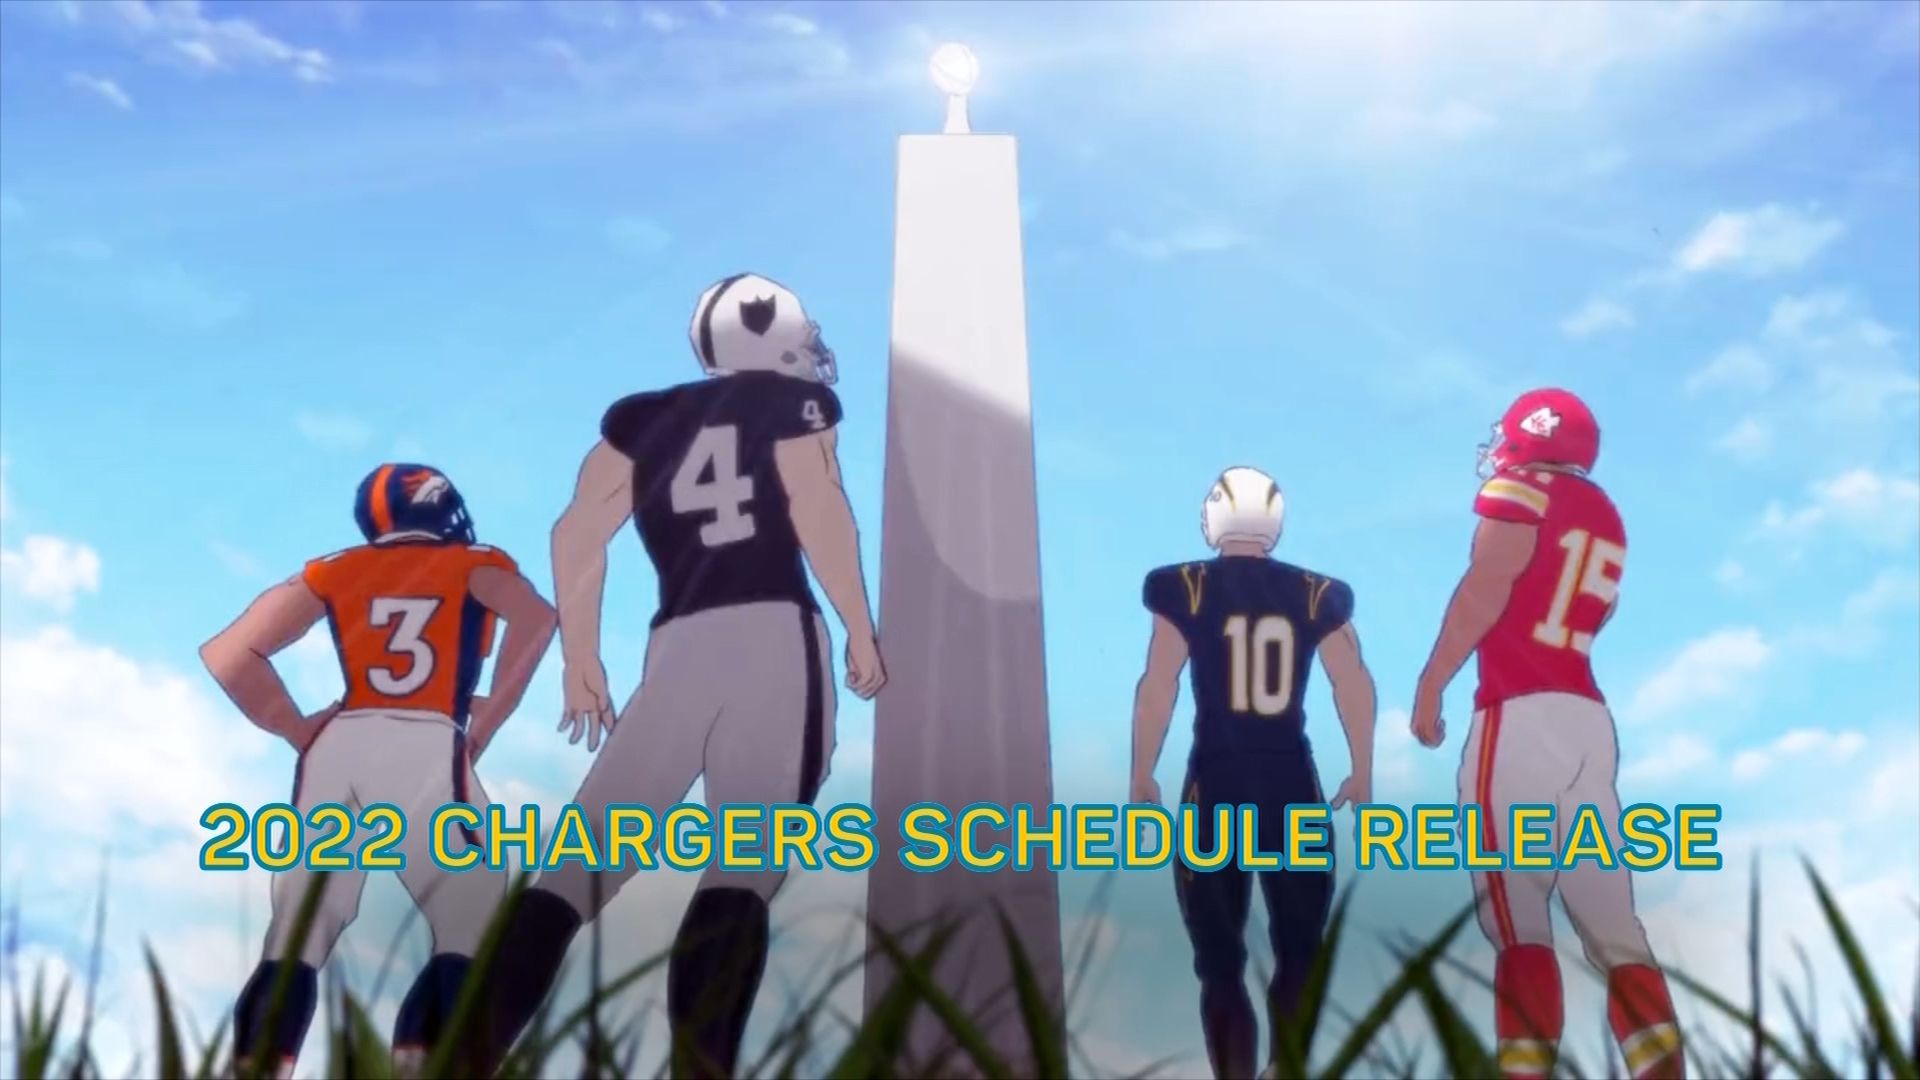 NFL teams get creative for 2023 schedule release